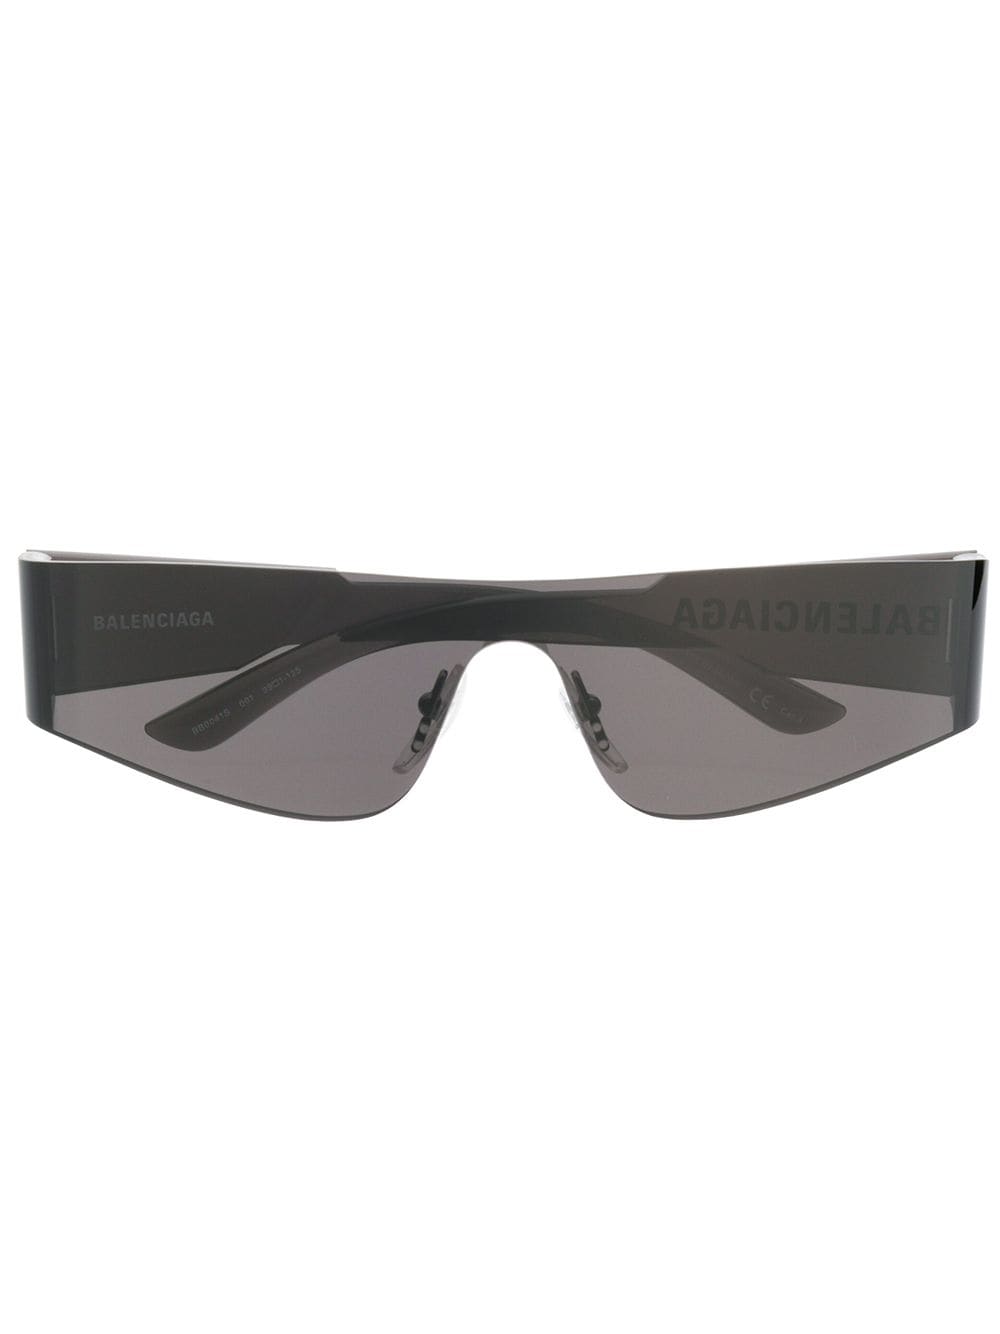 Balenciaga Eyewear frameless sunglasses - Schwarz Einheitsgröße Unisex